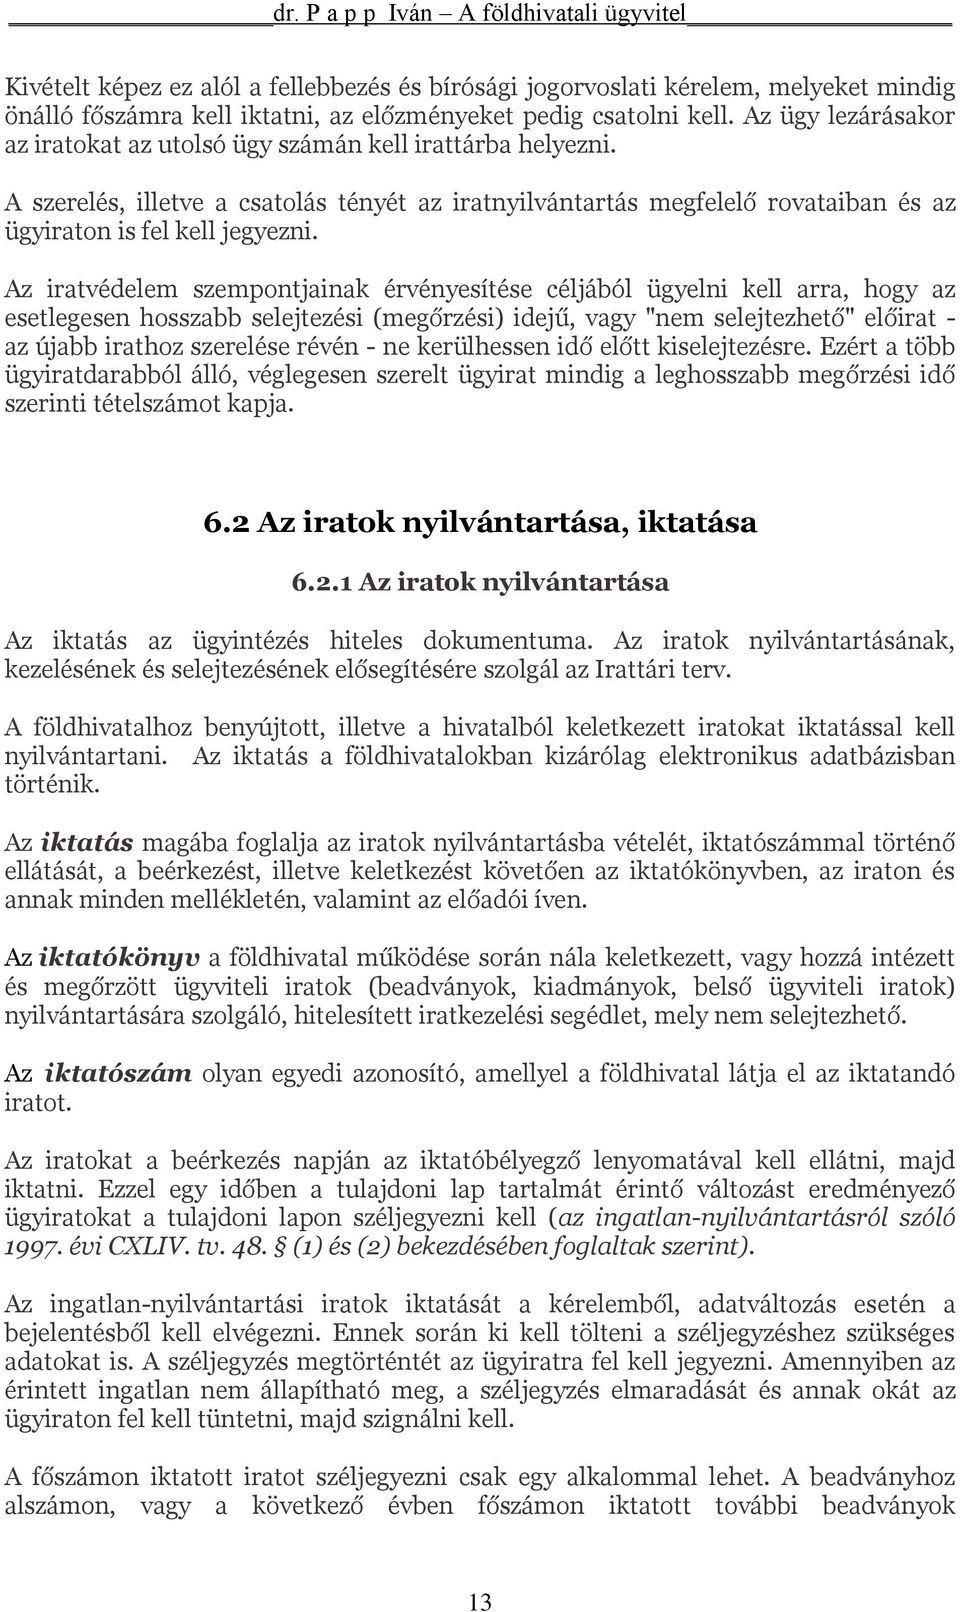 FÖLDHIVATALI ÜGYVITEL II. - PDF Free Download